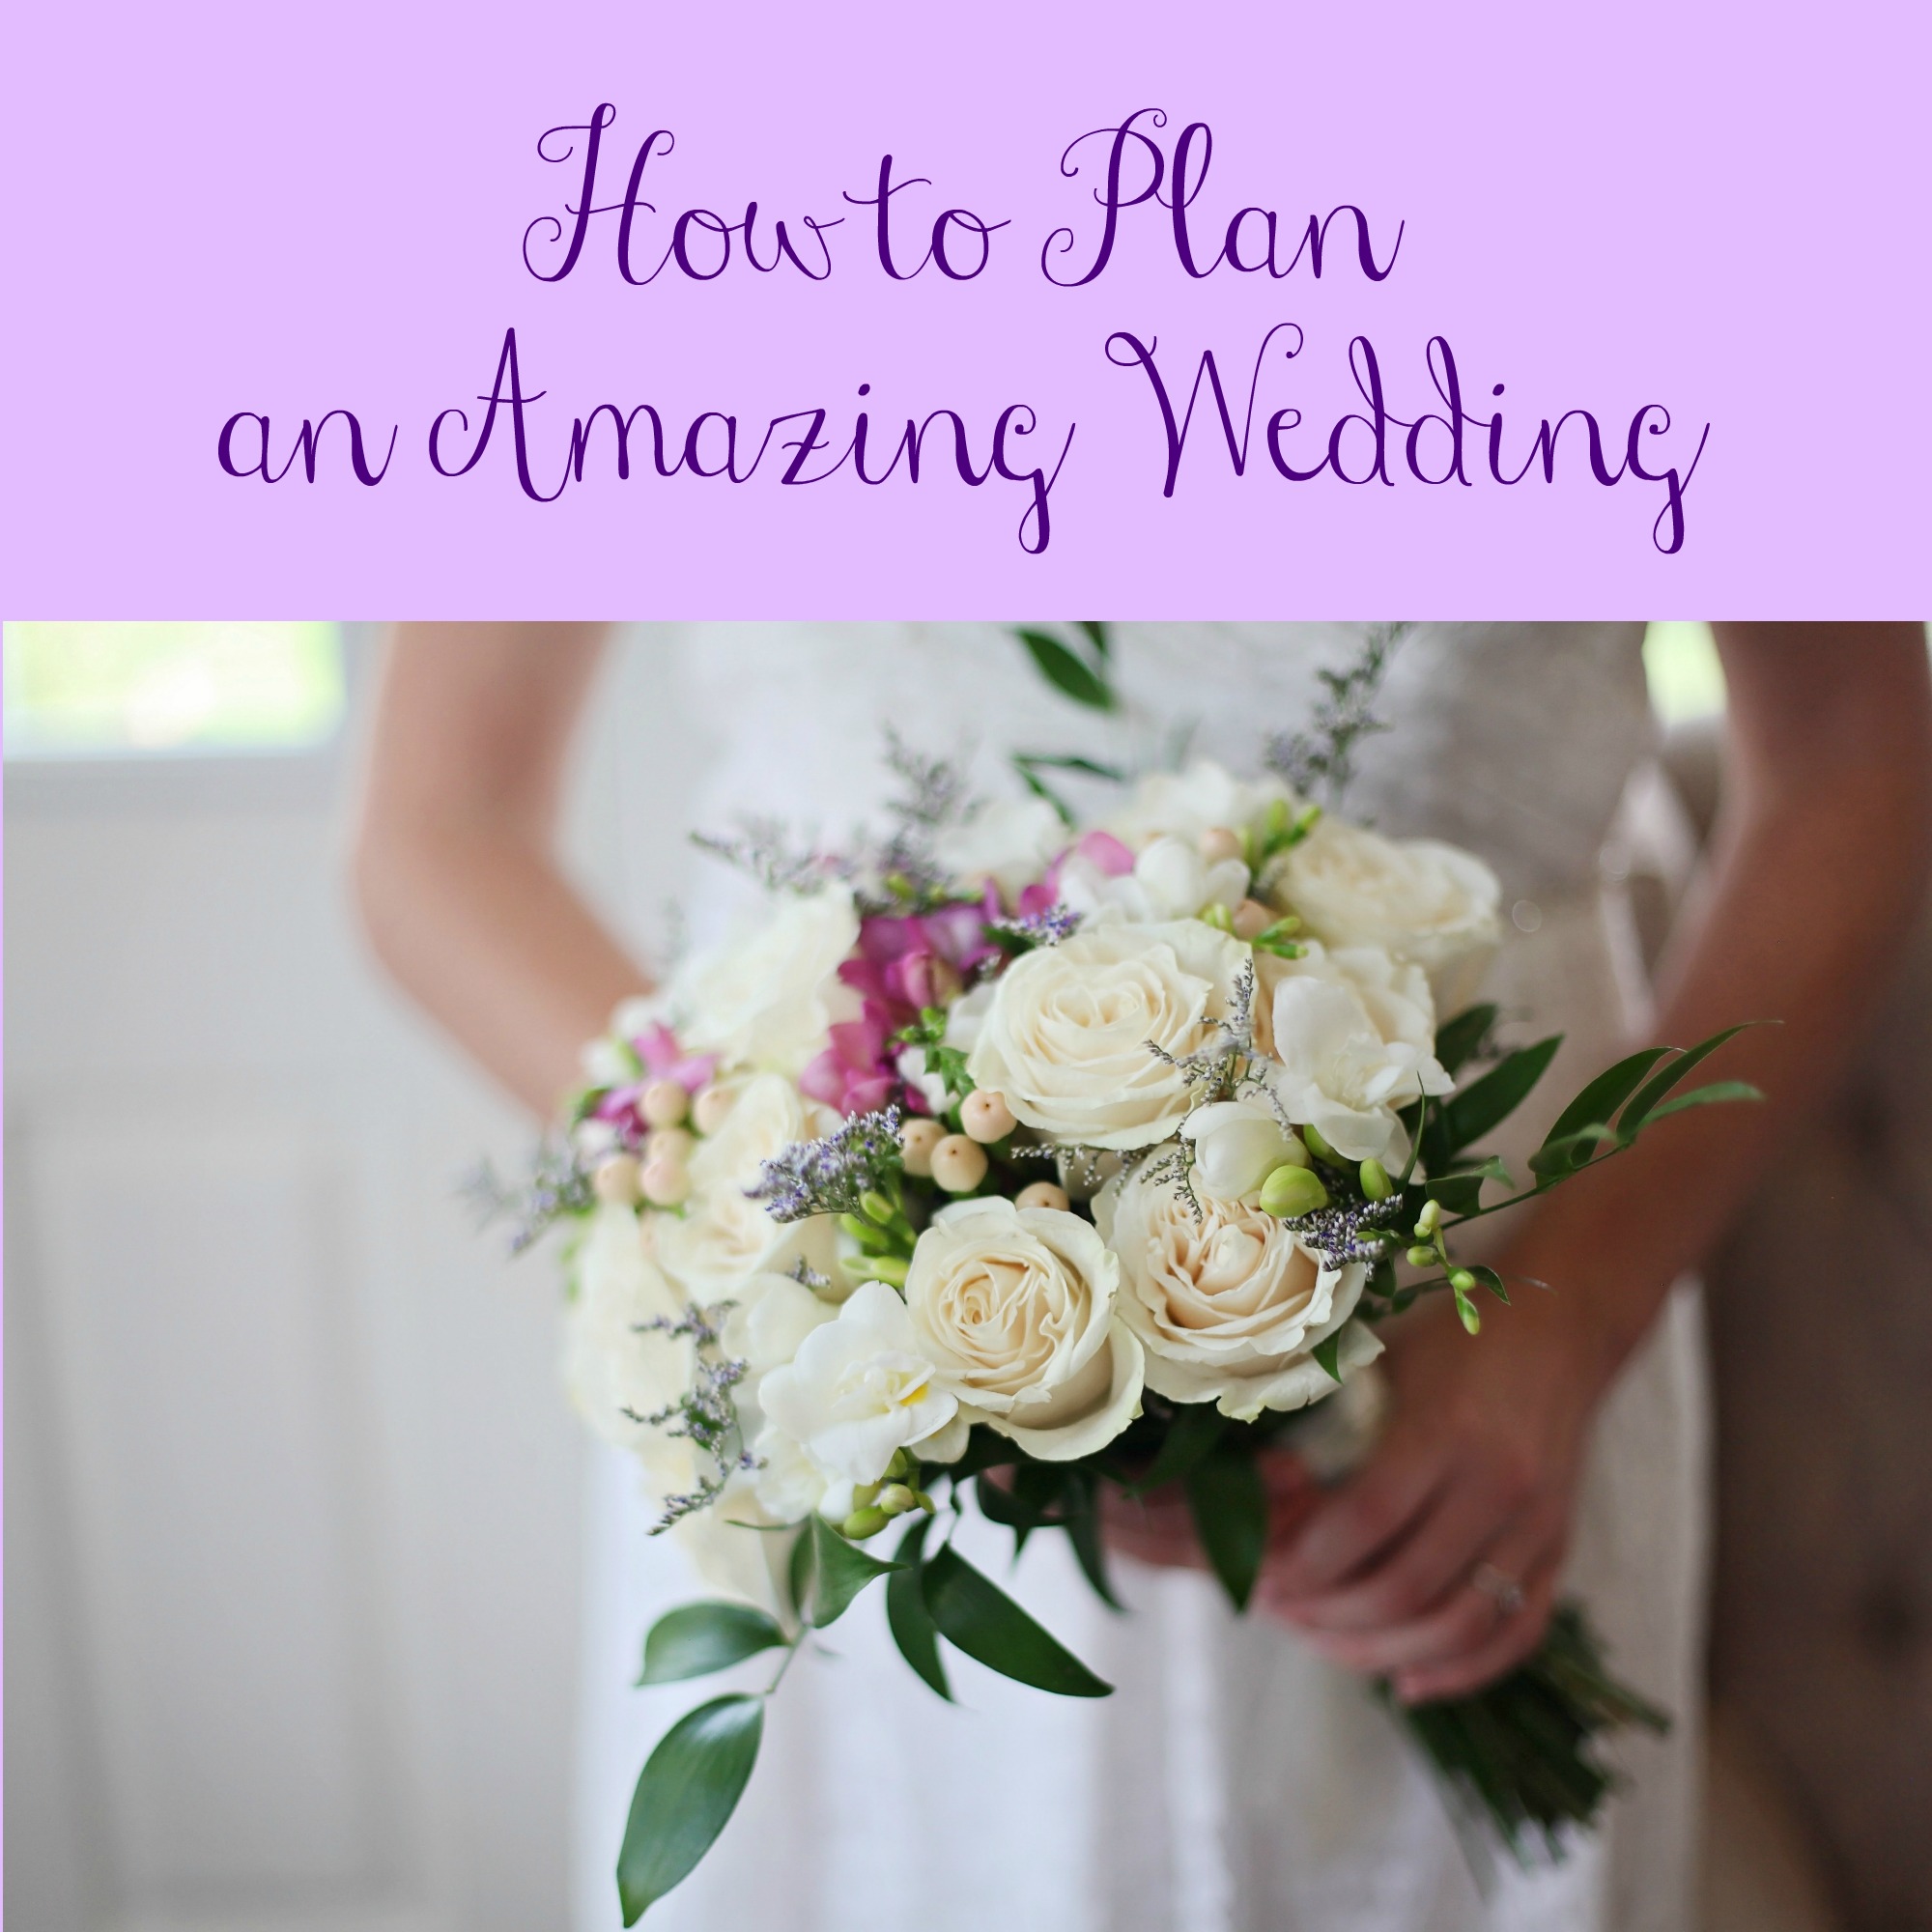 Planning An Amazing Wedding